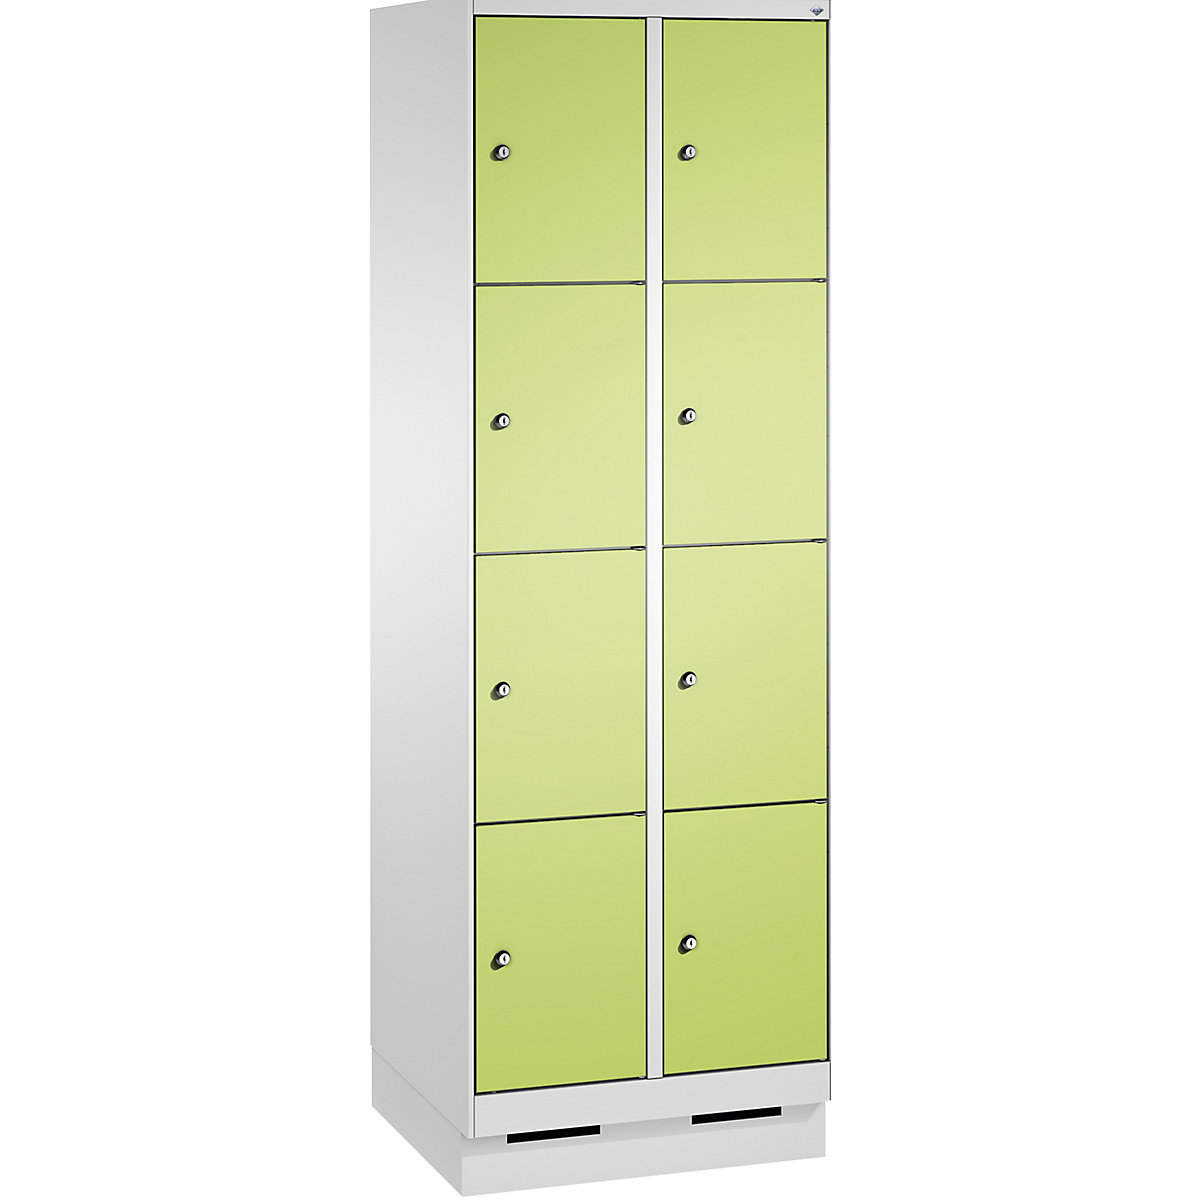 EVOLO locker unit, with plinth – C+P, 2 compartments, 4 shelf compartments each, compartment width 300 mm, light grey / viridian green-13